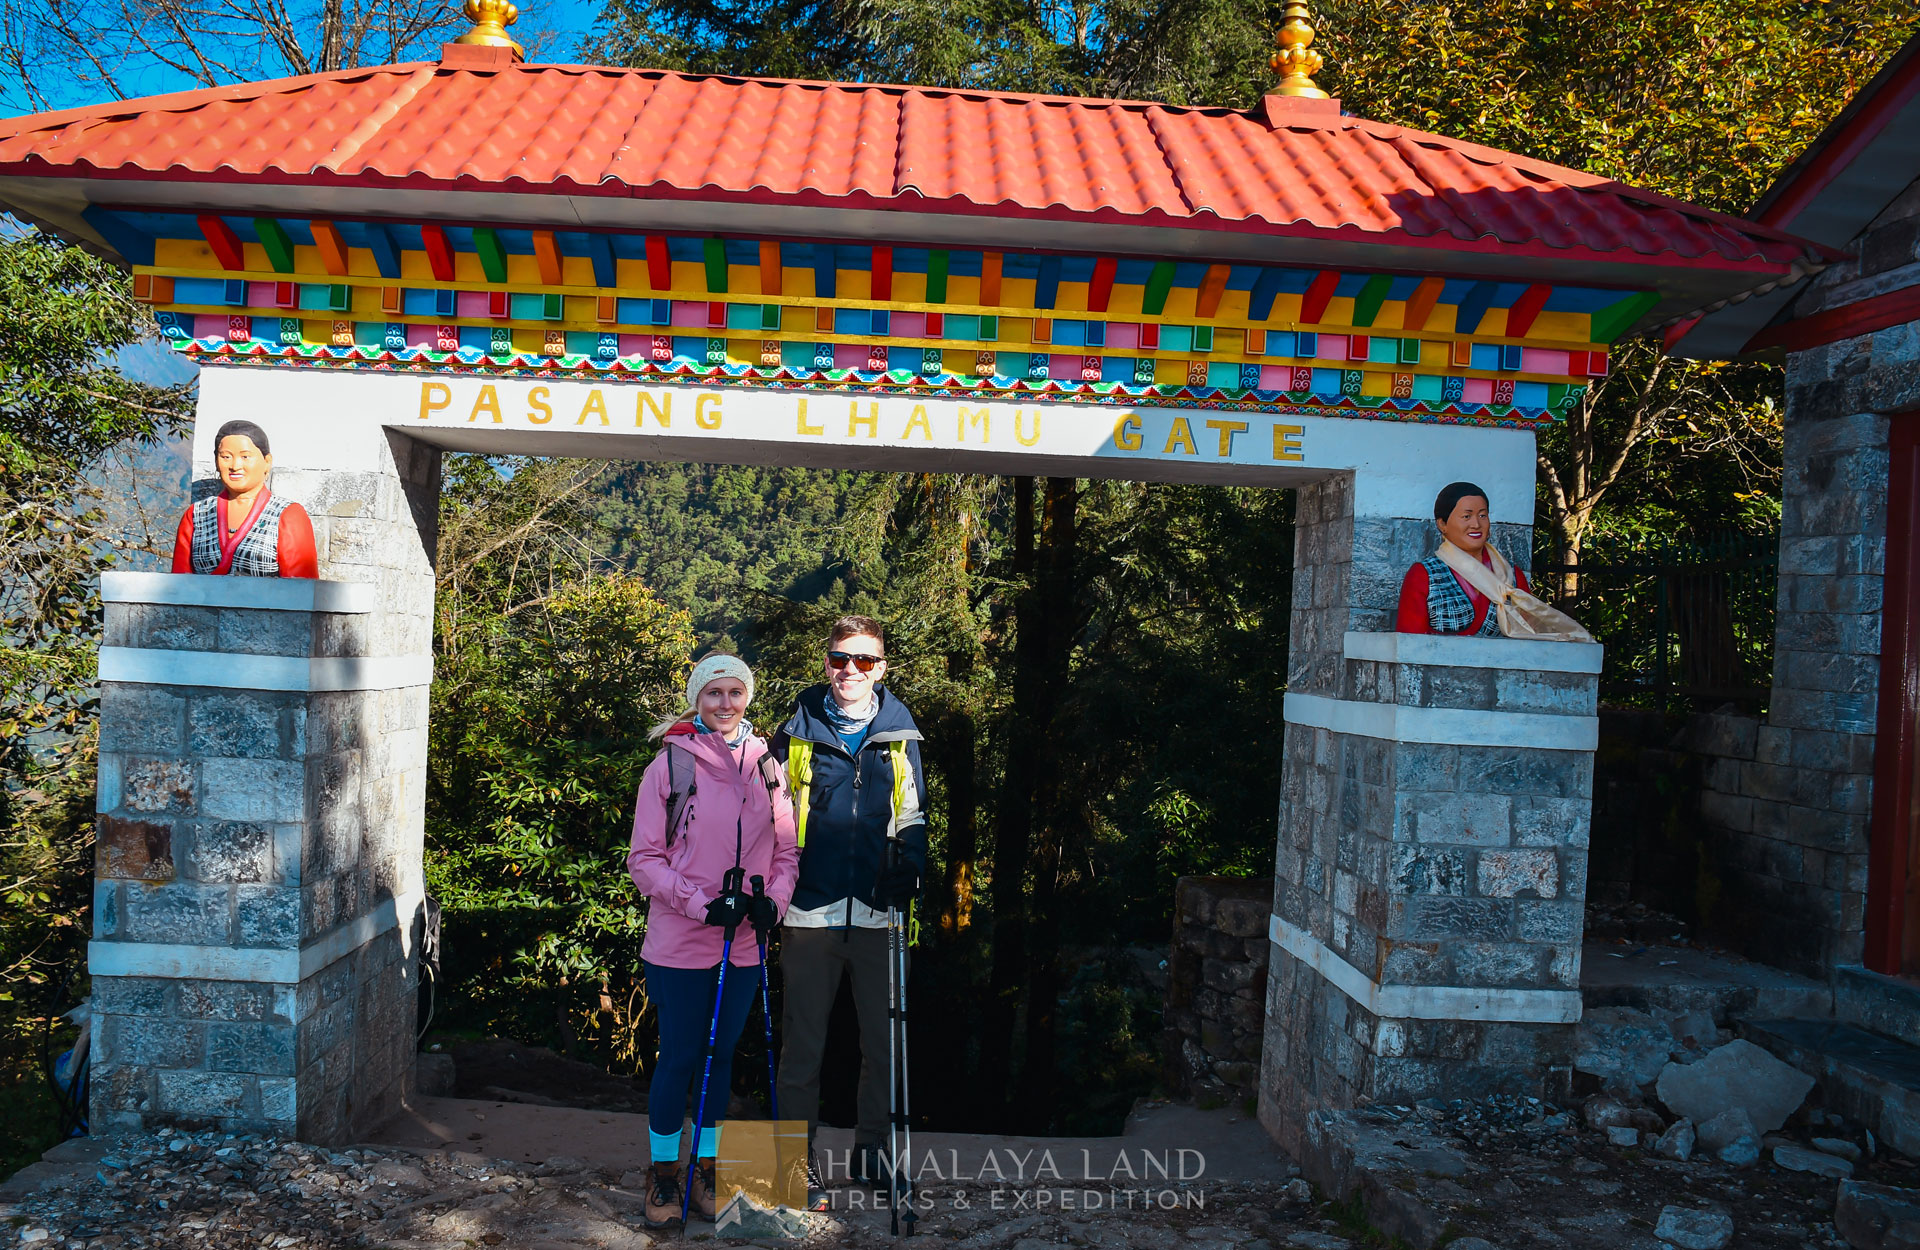 Pasang Lamu Gate: Sherpa heritage and gateway to Everest's wonders.